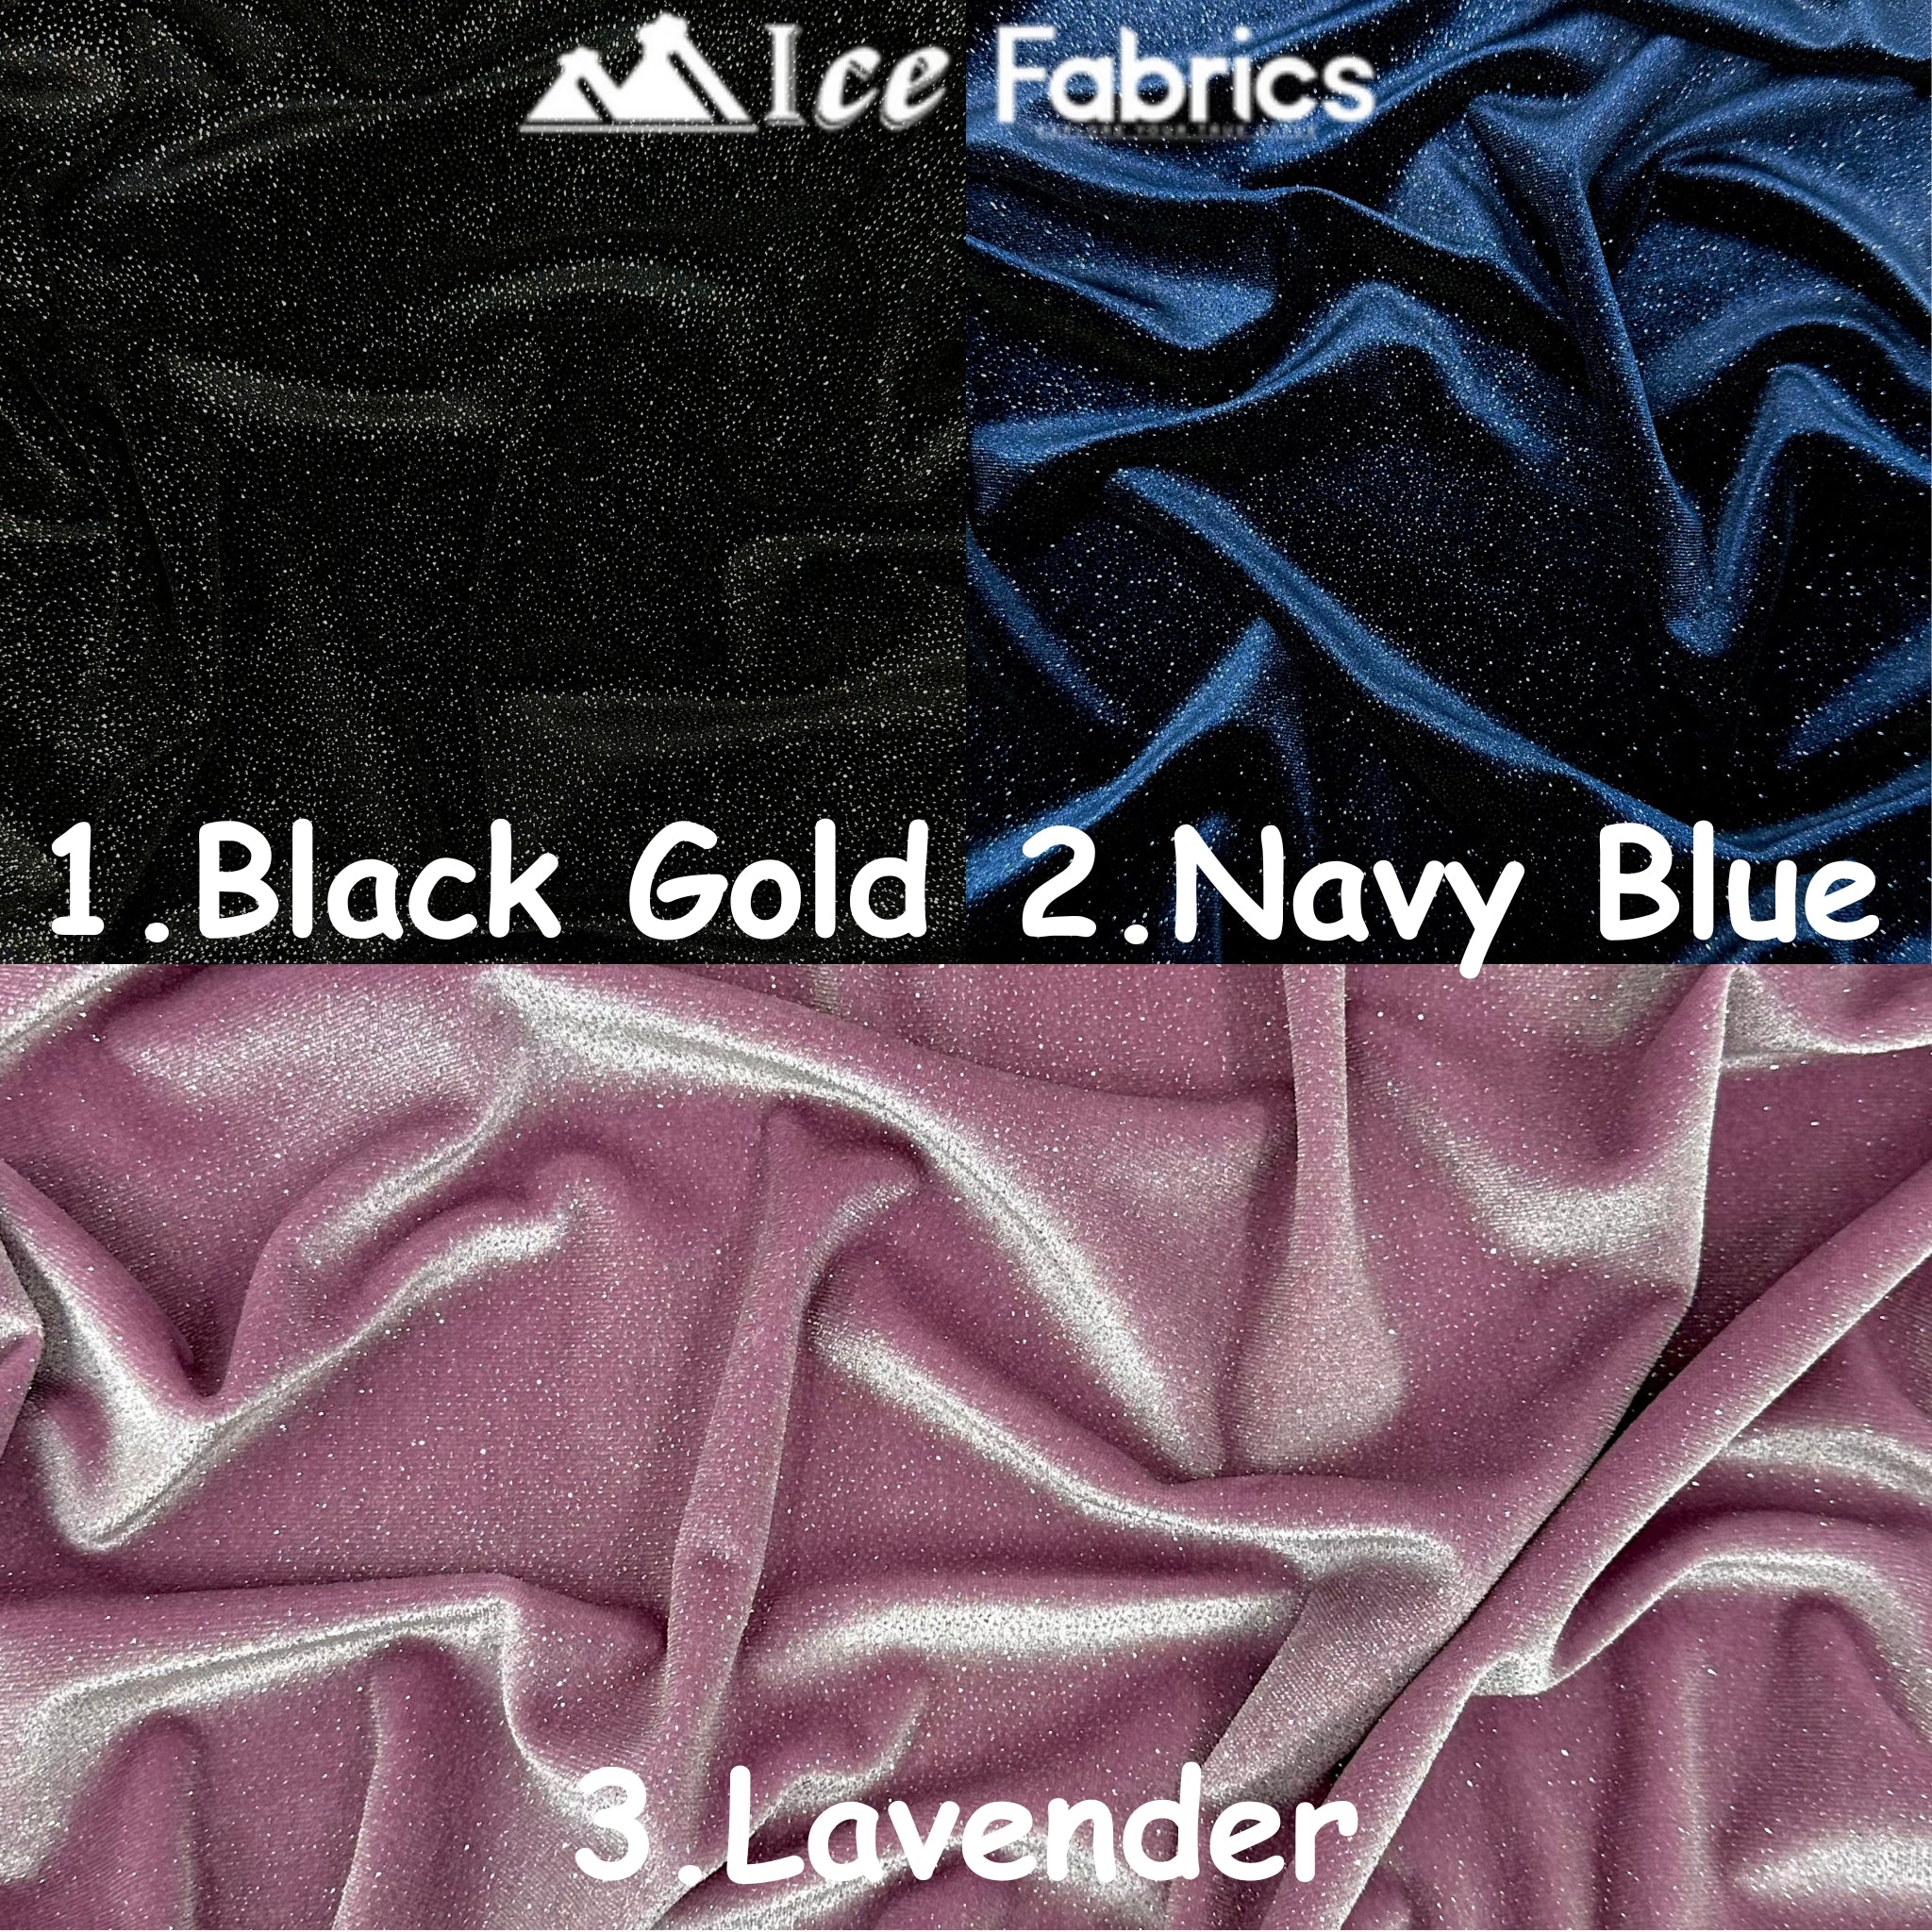 Shiny Glitter Stretch Velvet Fabric | Ice Fabrics